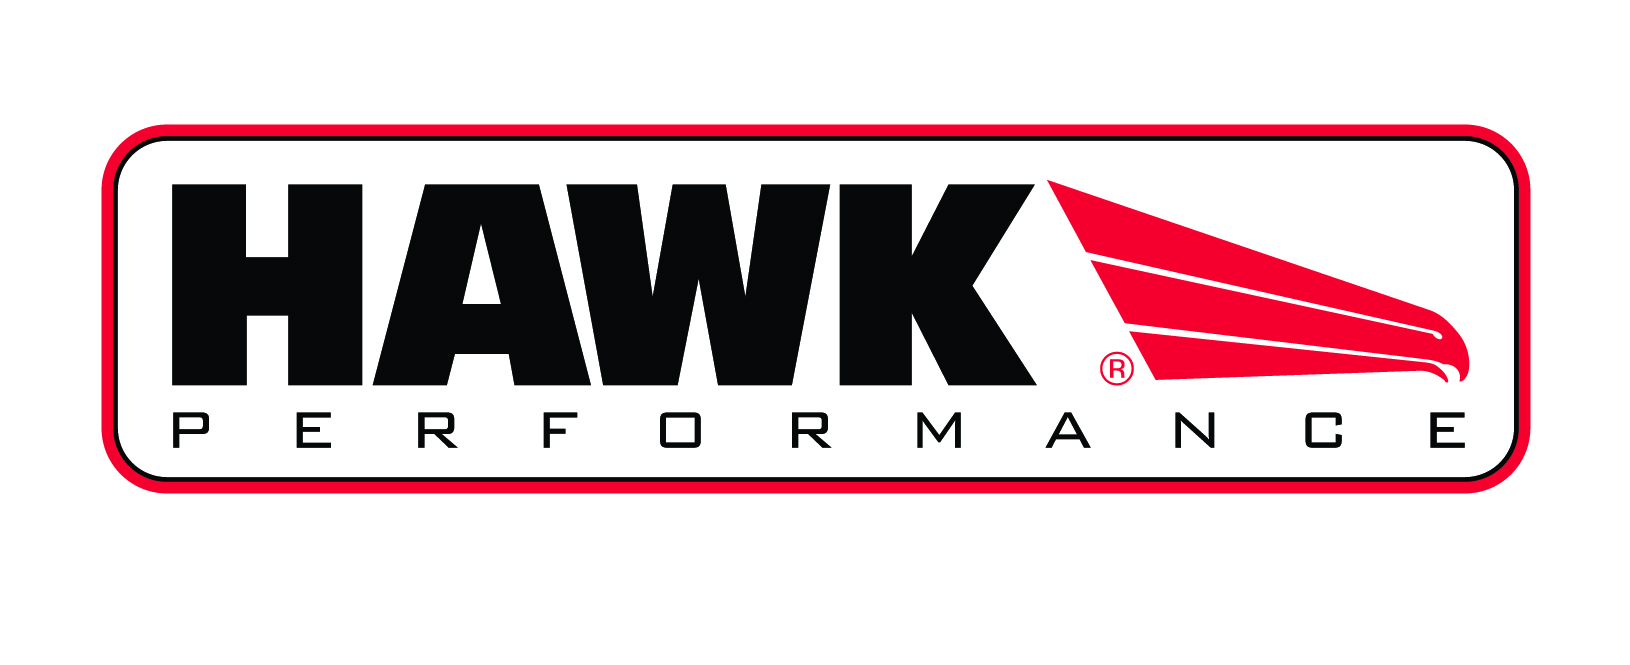 Brzdové kotouče Hawk Performance RAM Trucks RAM (5th Gen) 2019-Present